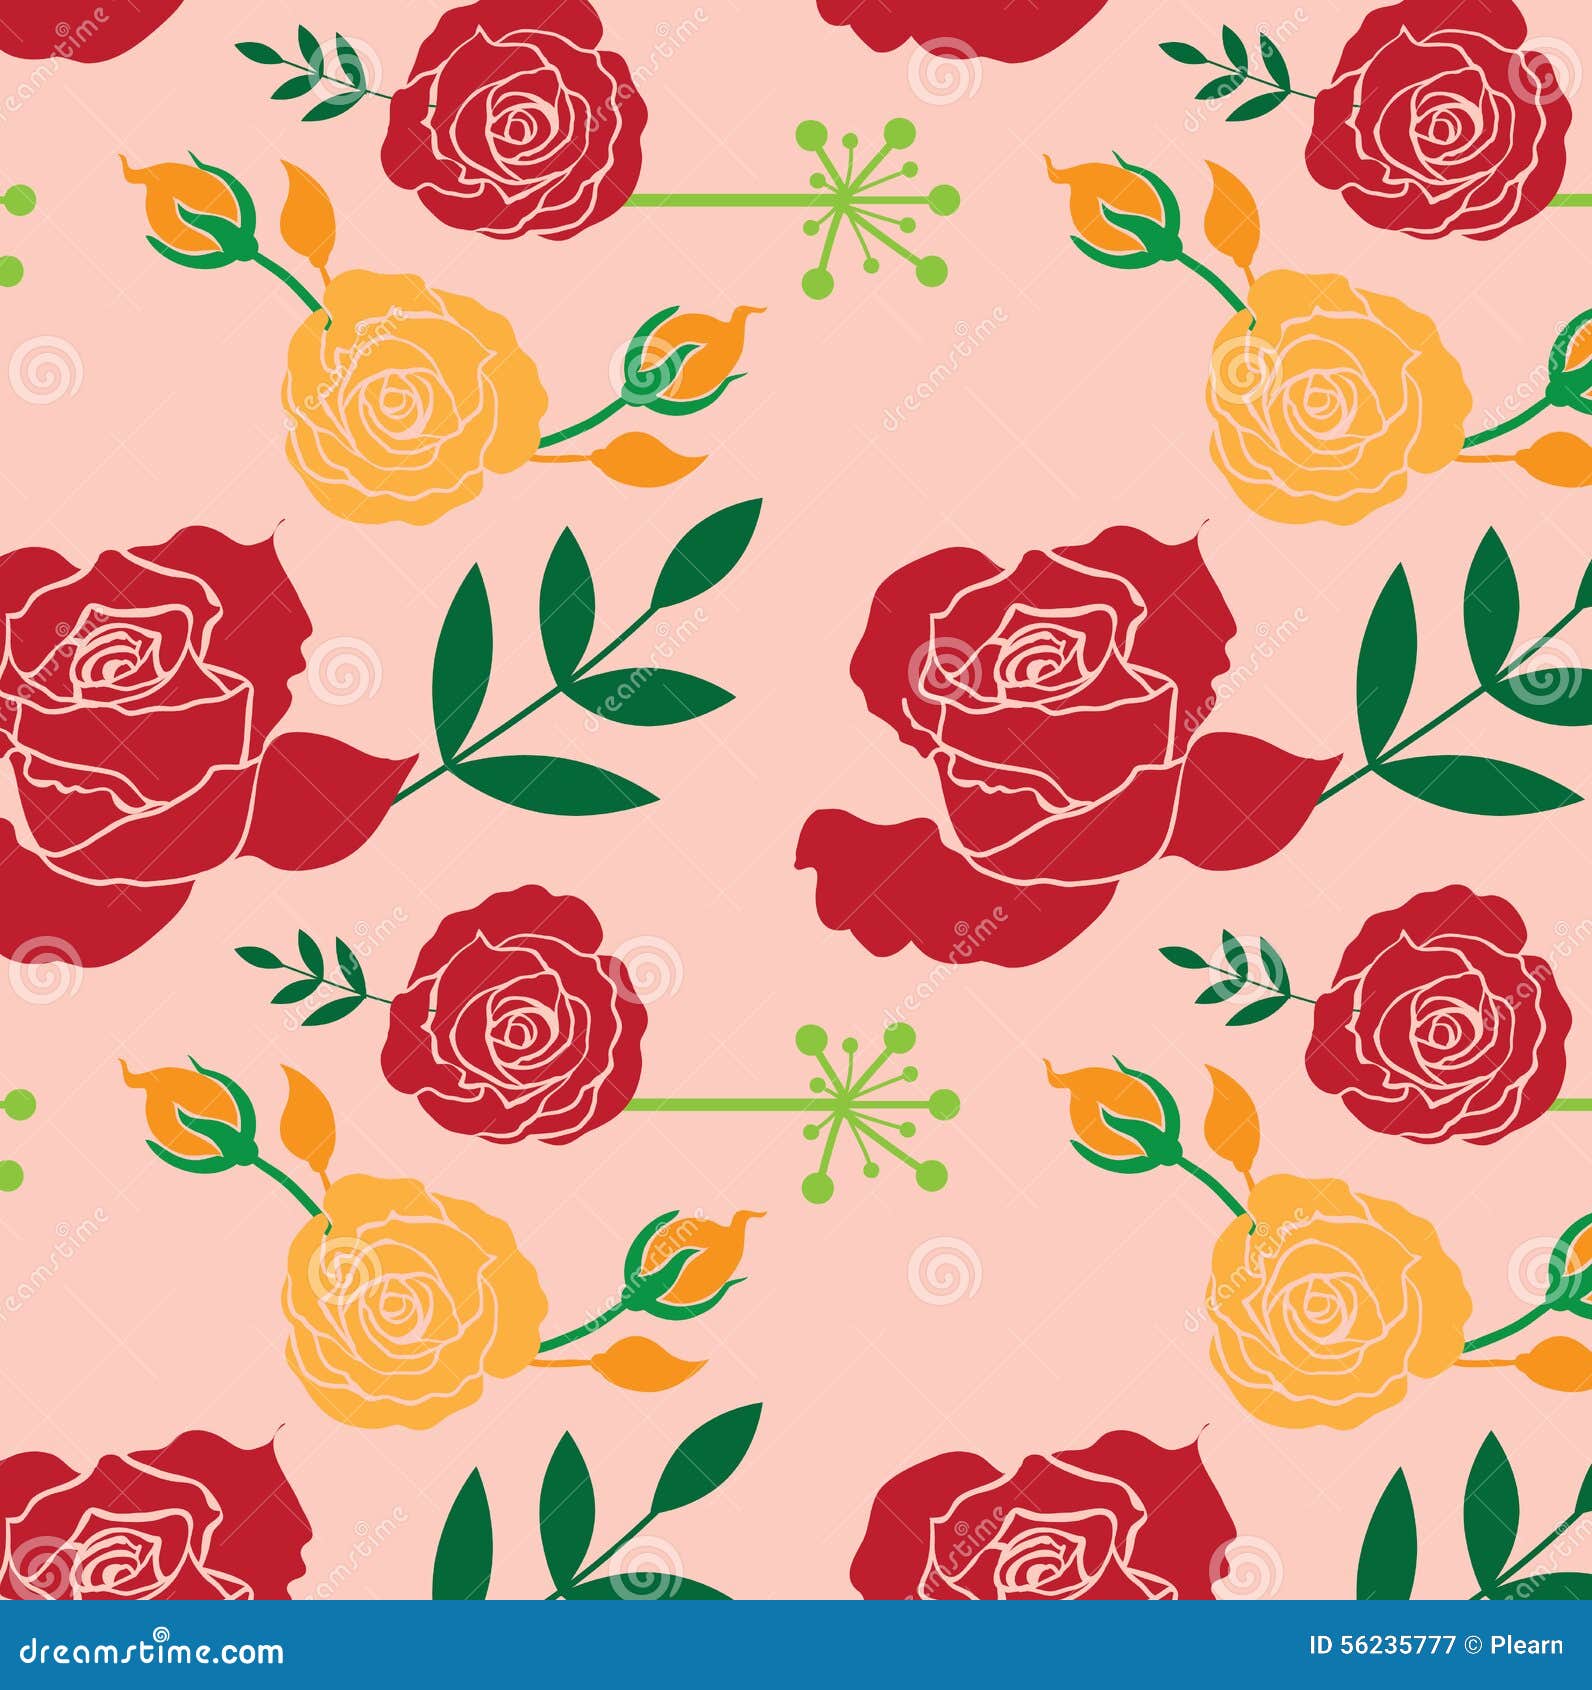 Floral Roses Pattern Elements for Design Stock Vector - Illustration of ...